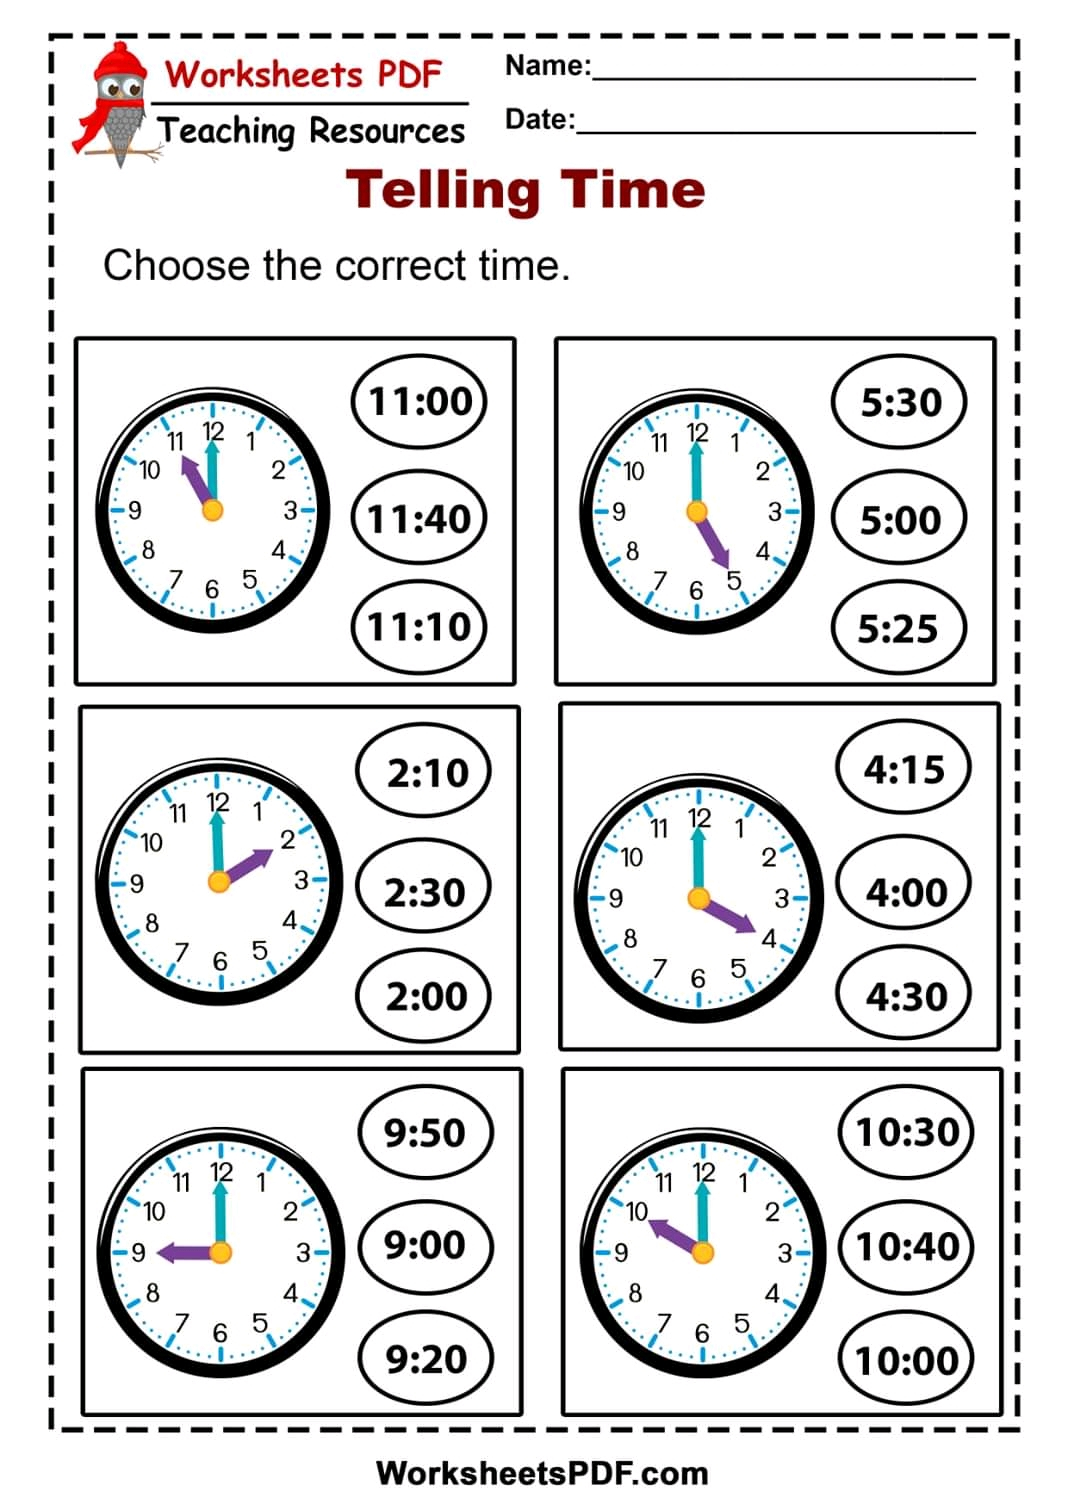 Worksheet On Telling Time